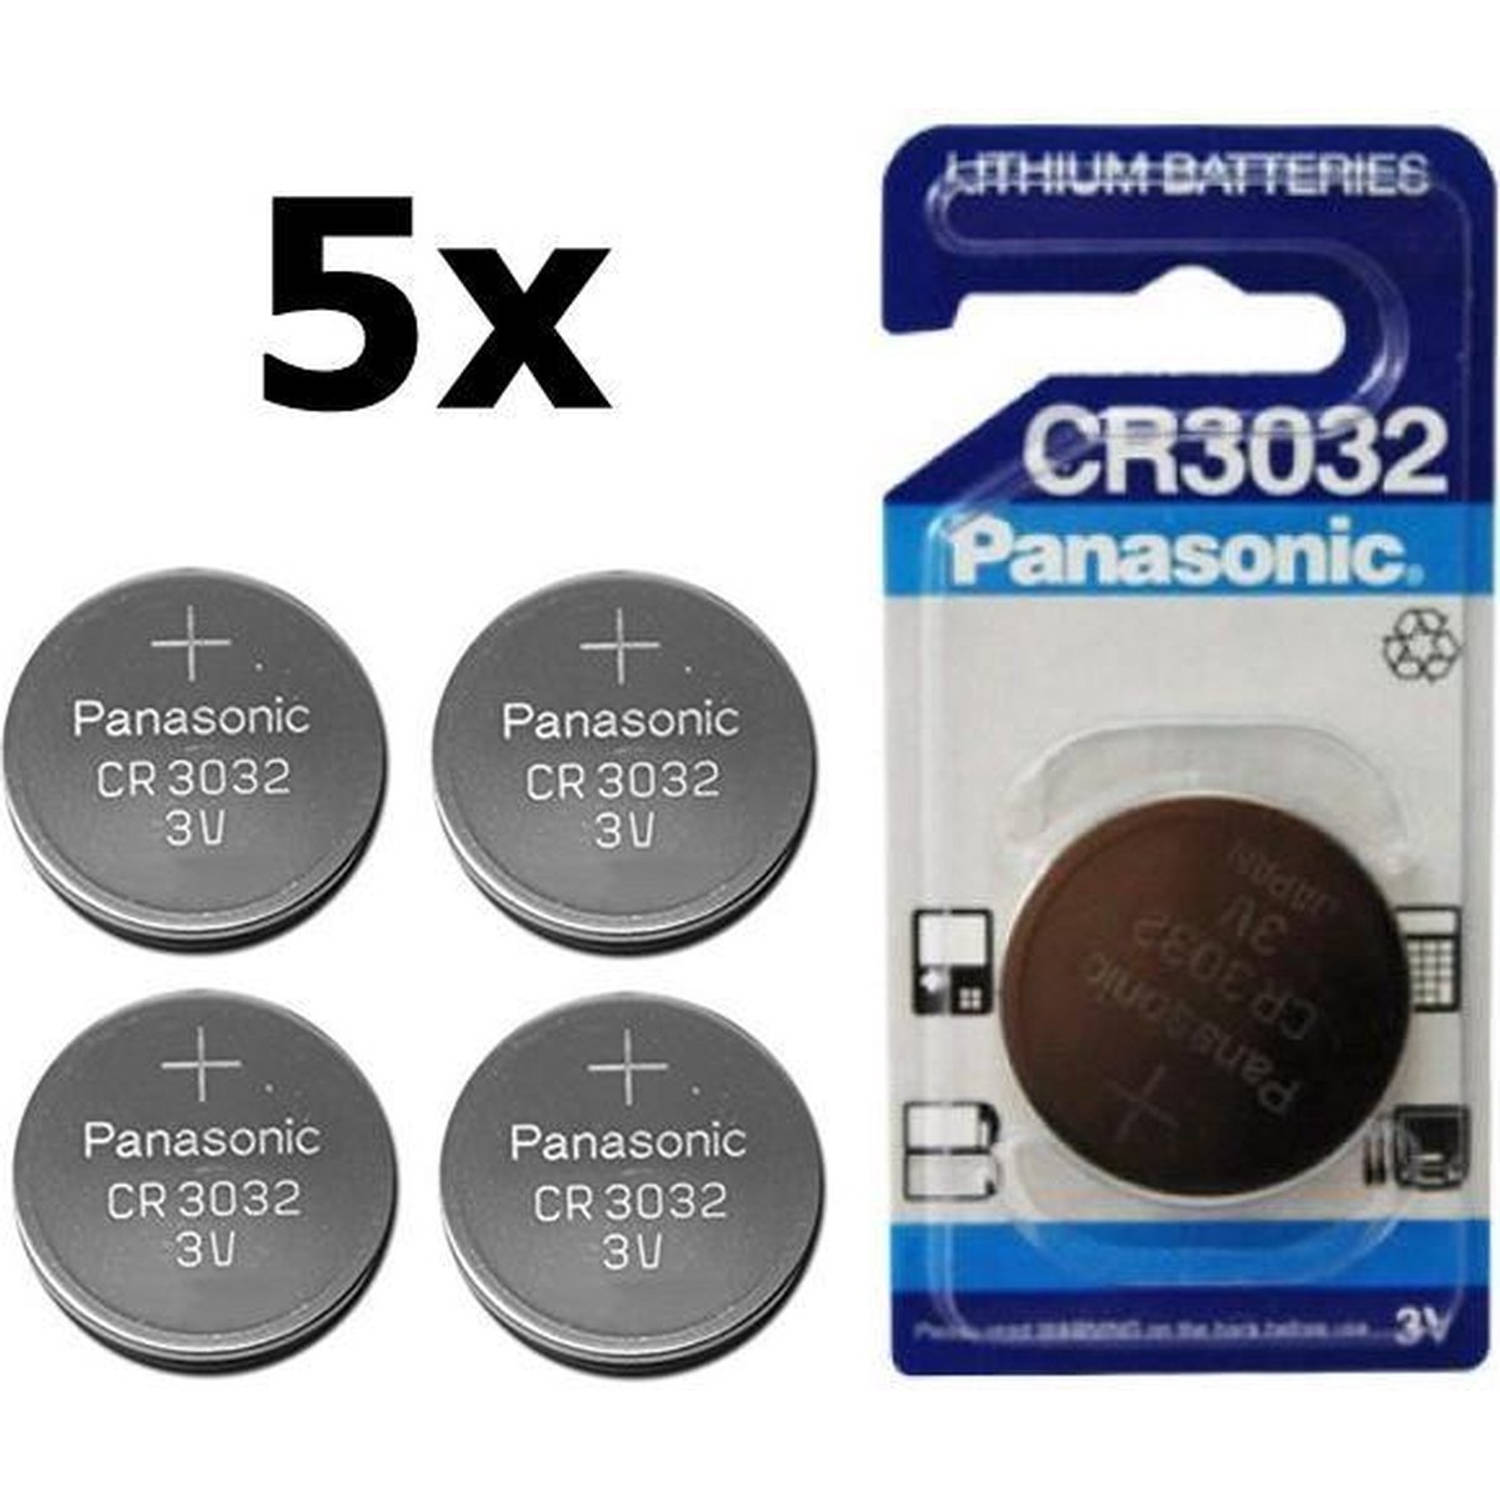 5 Stuks - Panasonic Lithium CR3032 500mAh 3V knoopcel batterij